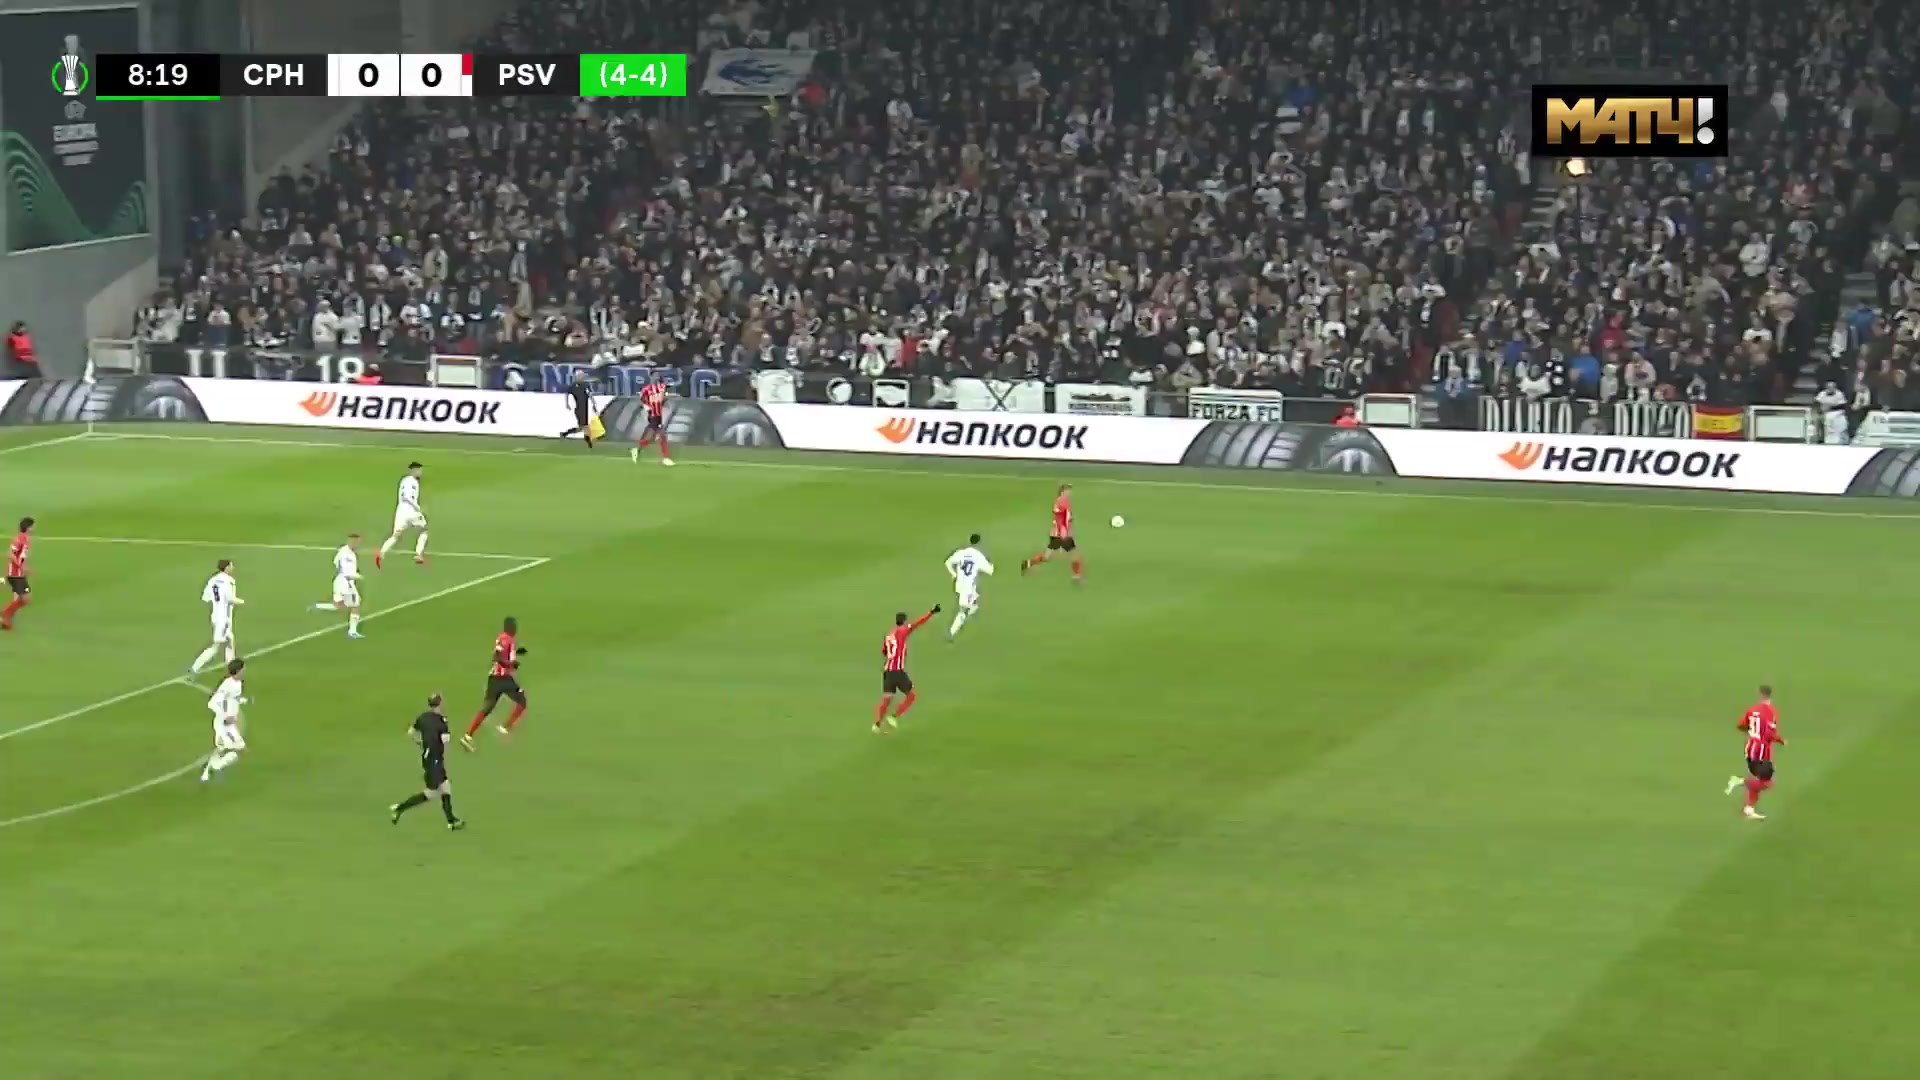 UEFA ECL FC Copenhagen Vs PSV Eindhoven Eran Zahavi Goal in 8 min, Score 0:1